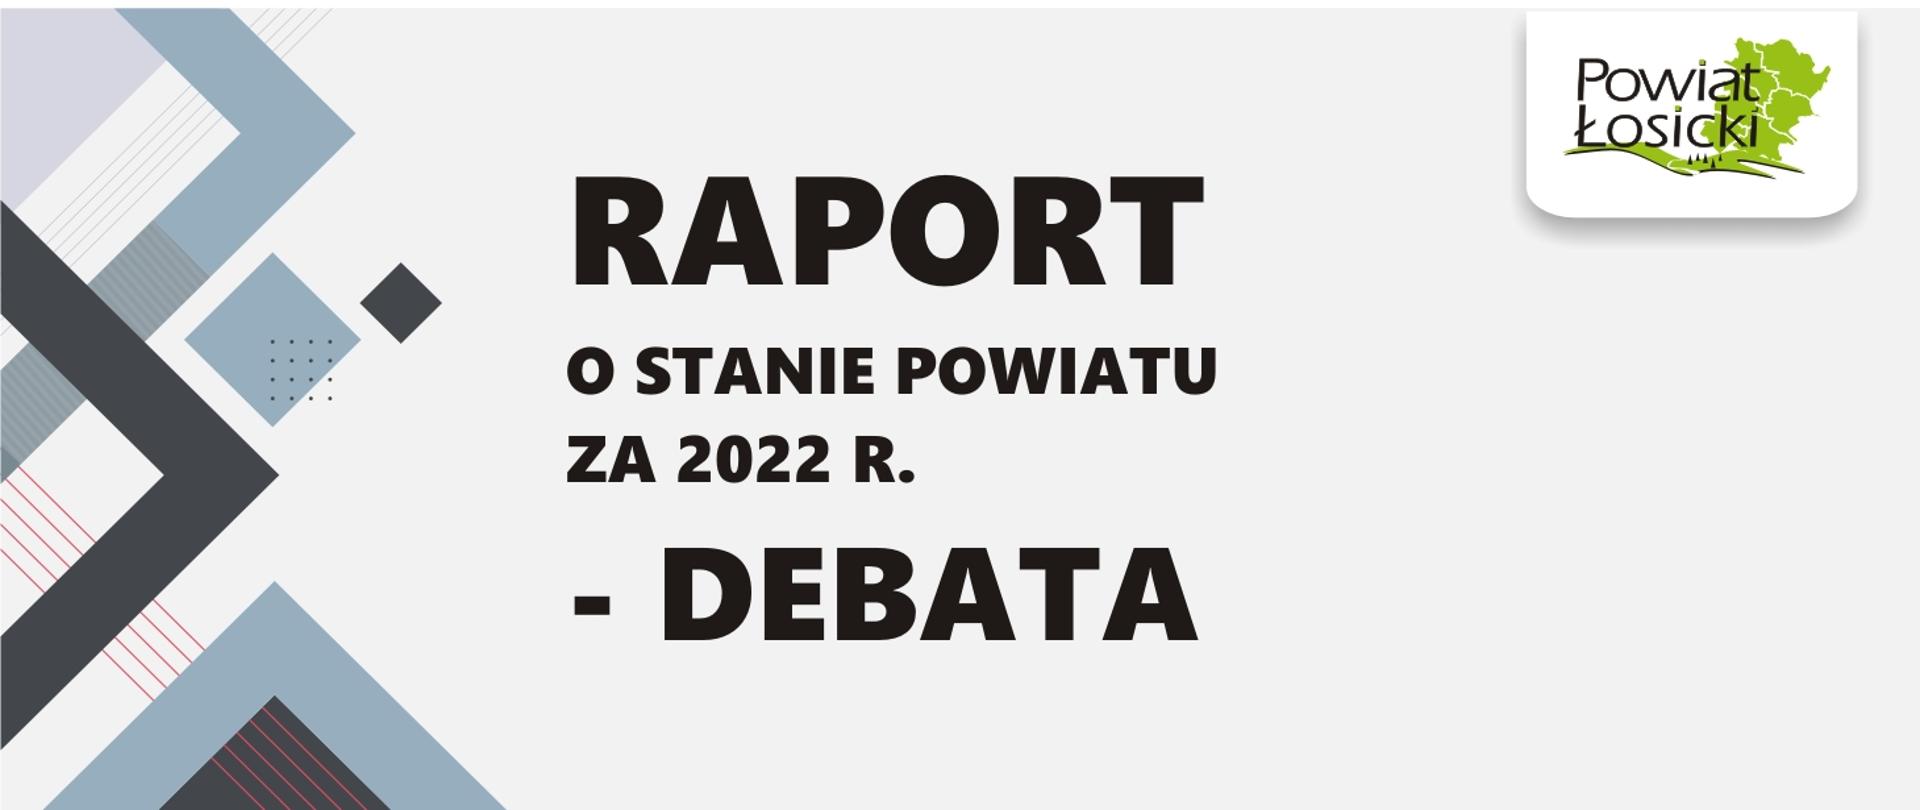 Raport o stanie powiatu za 2022 r. - debata